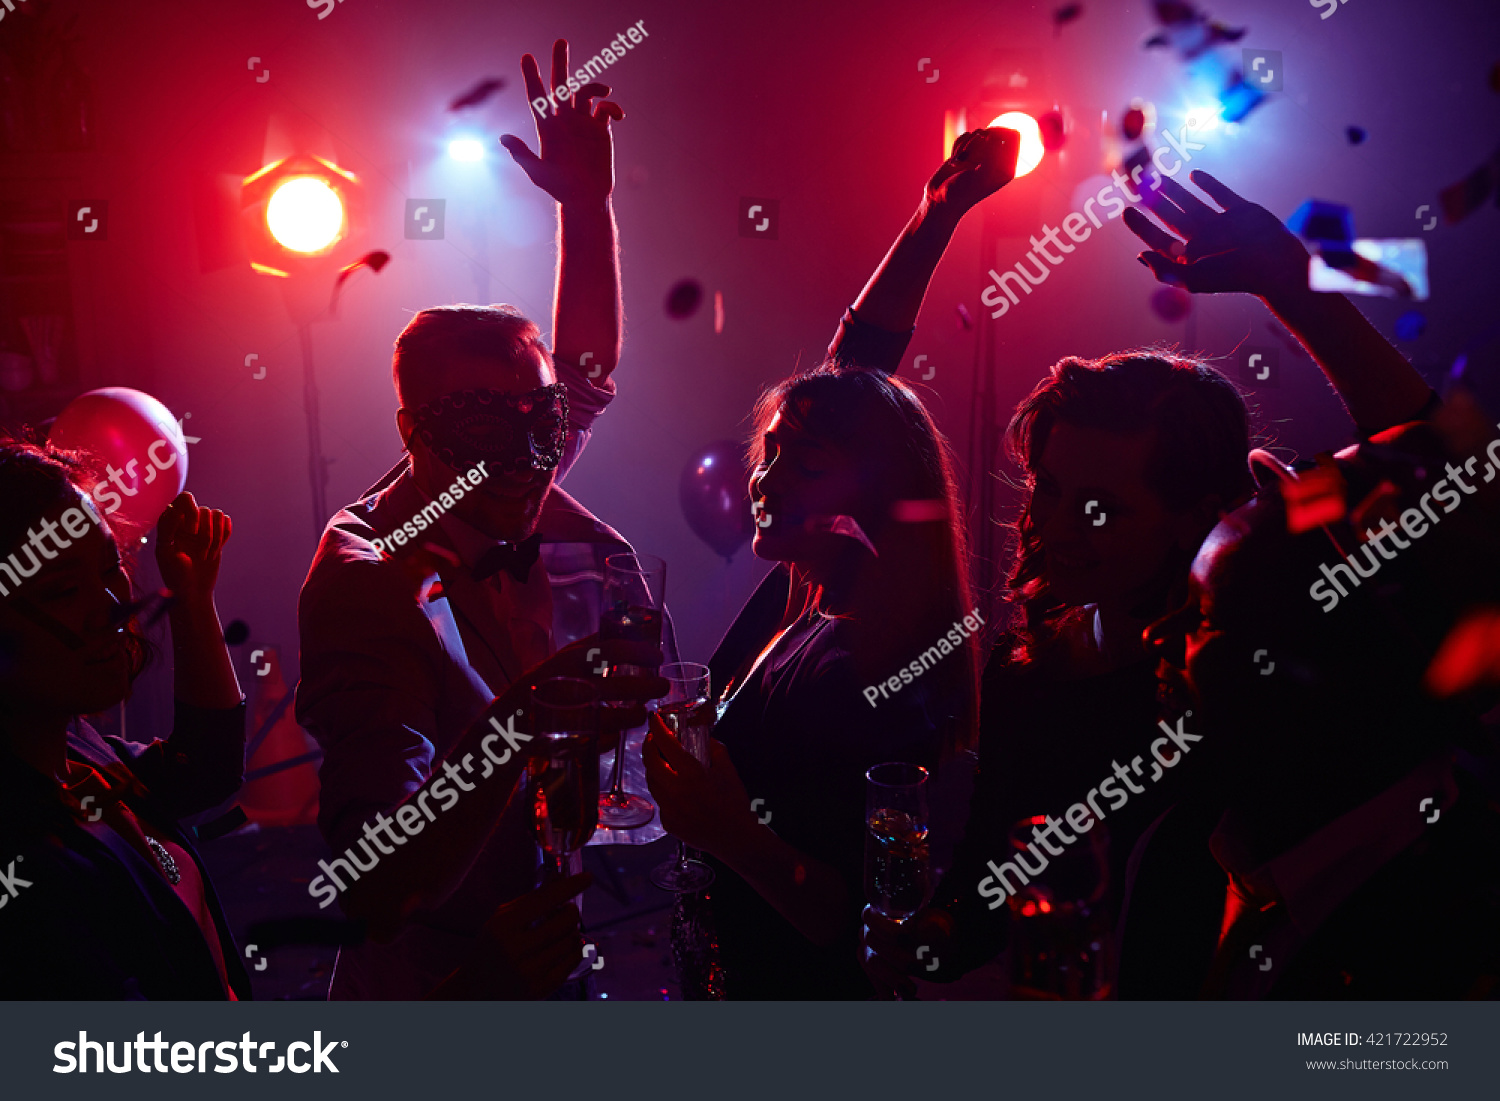 Friends Cheering In Club Stock Photo 421722952 : Shutterstock